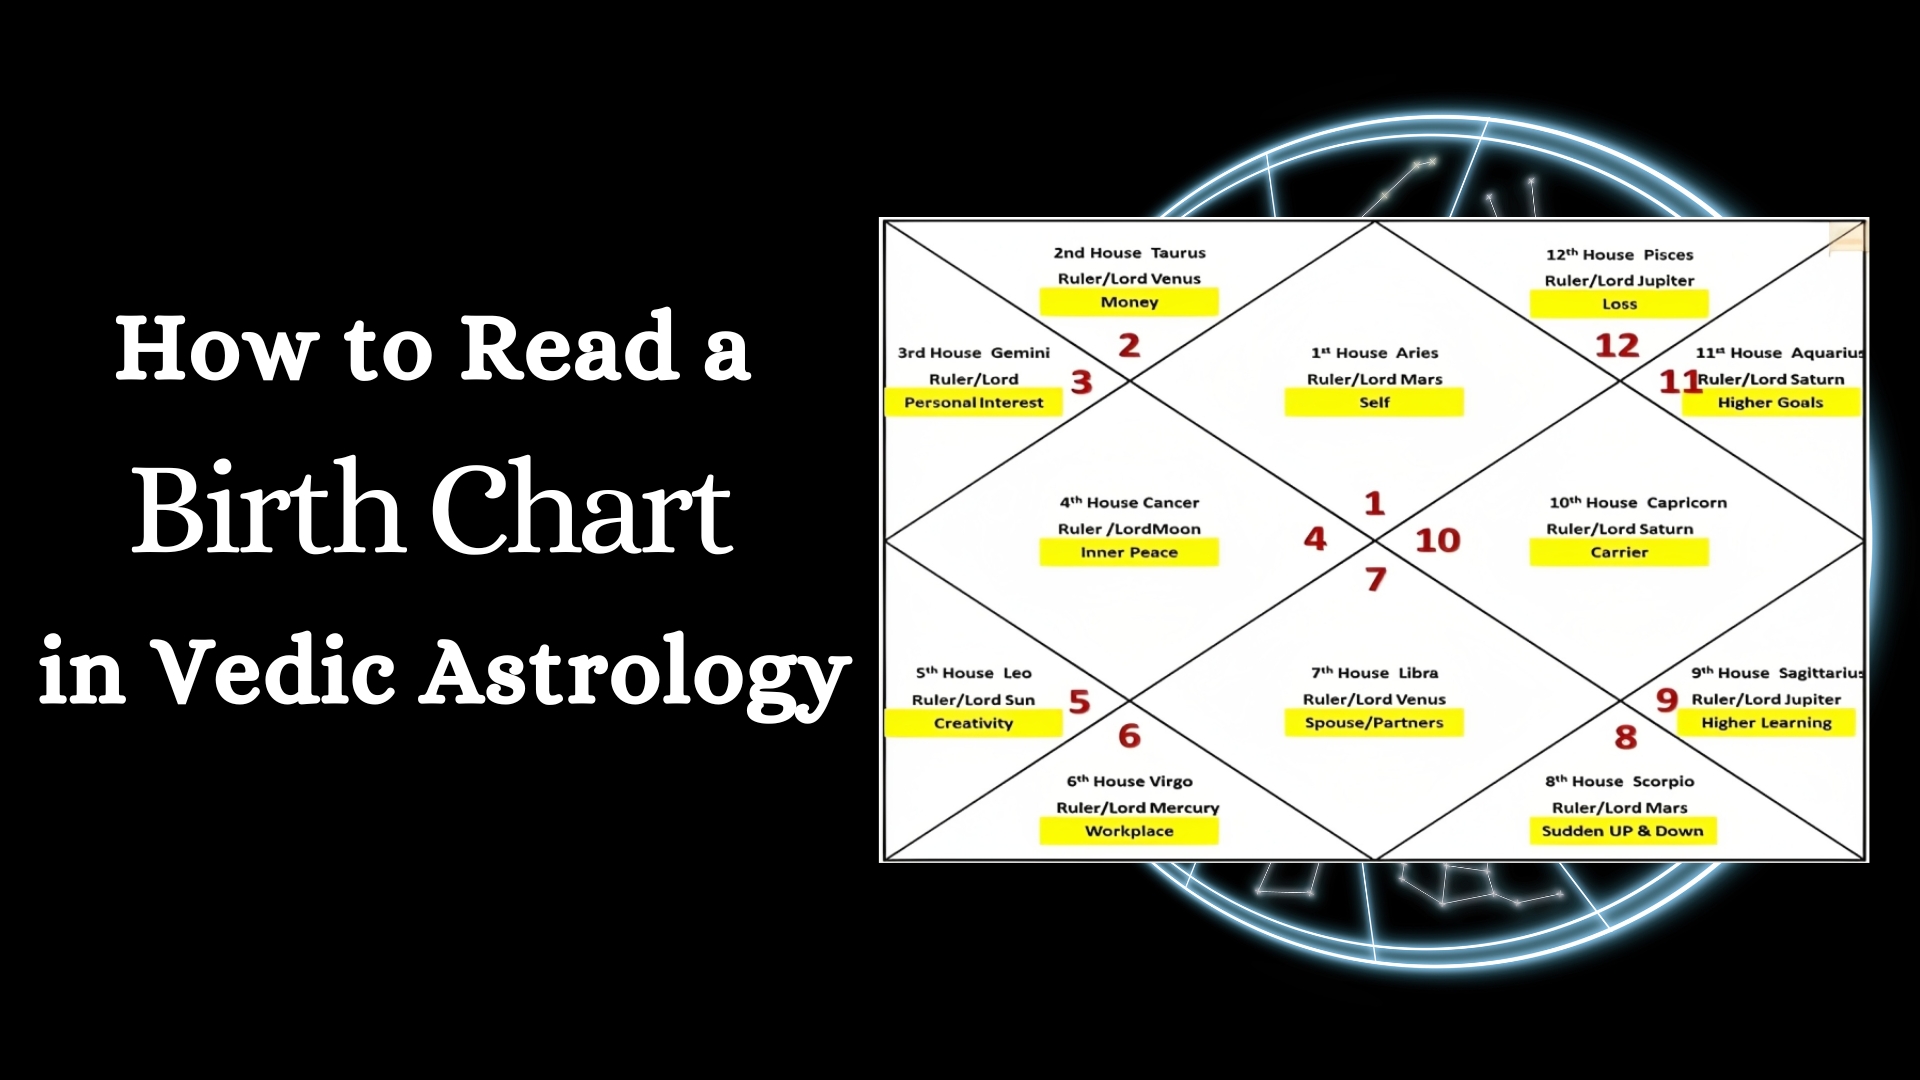 Birth Chart in Vedic Astrology